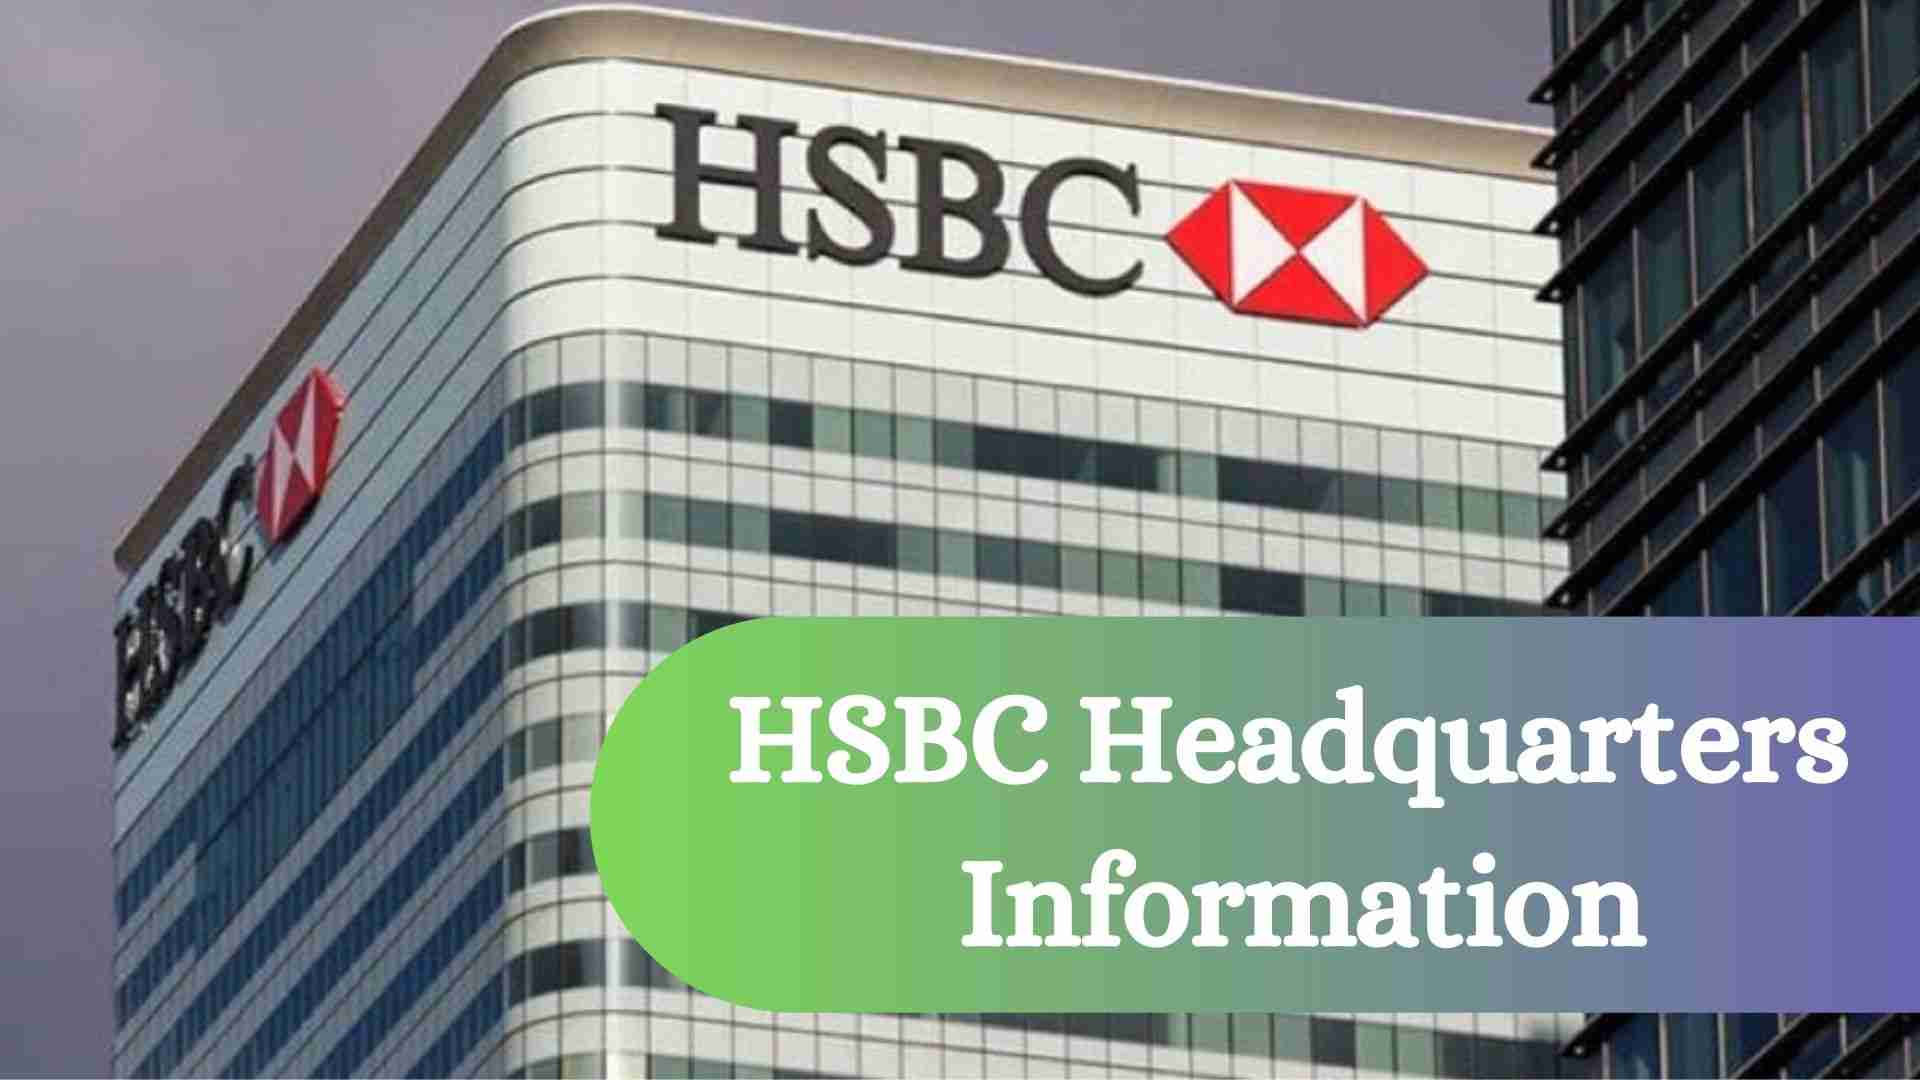 HSBC Headquarters Information